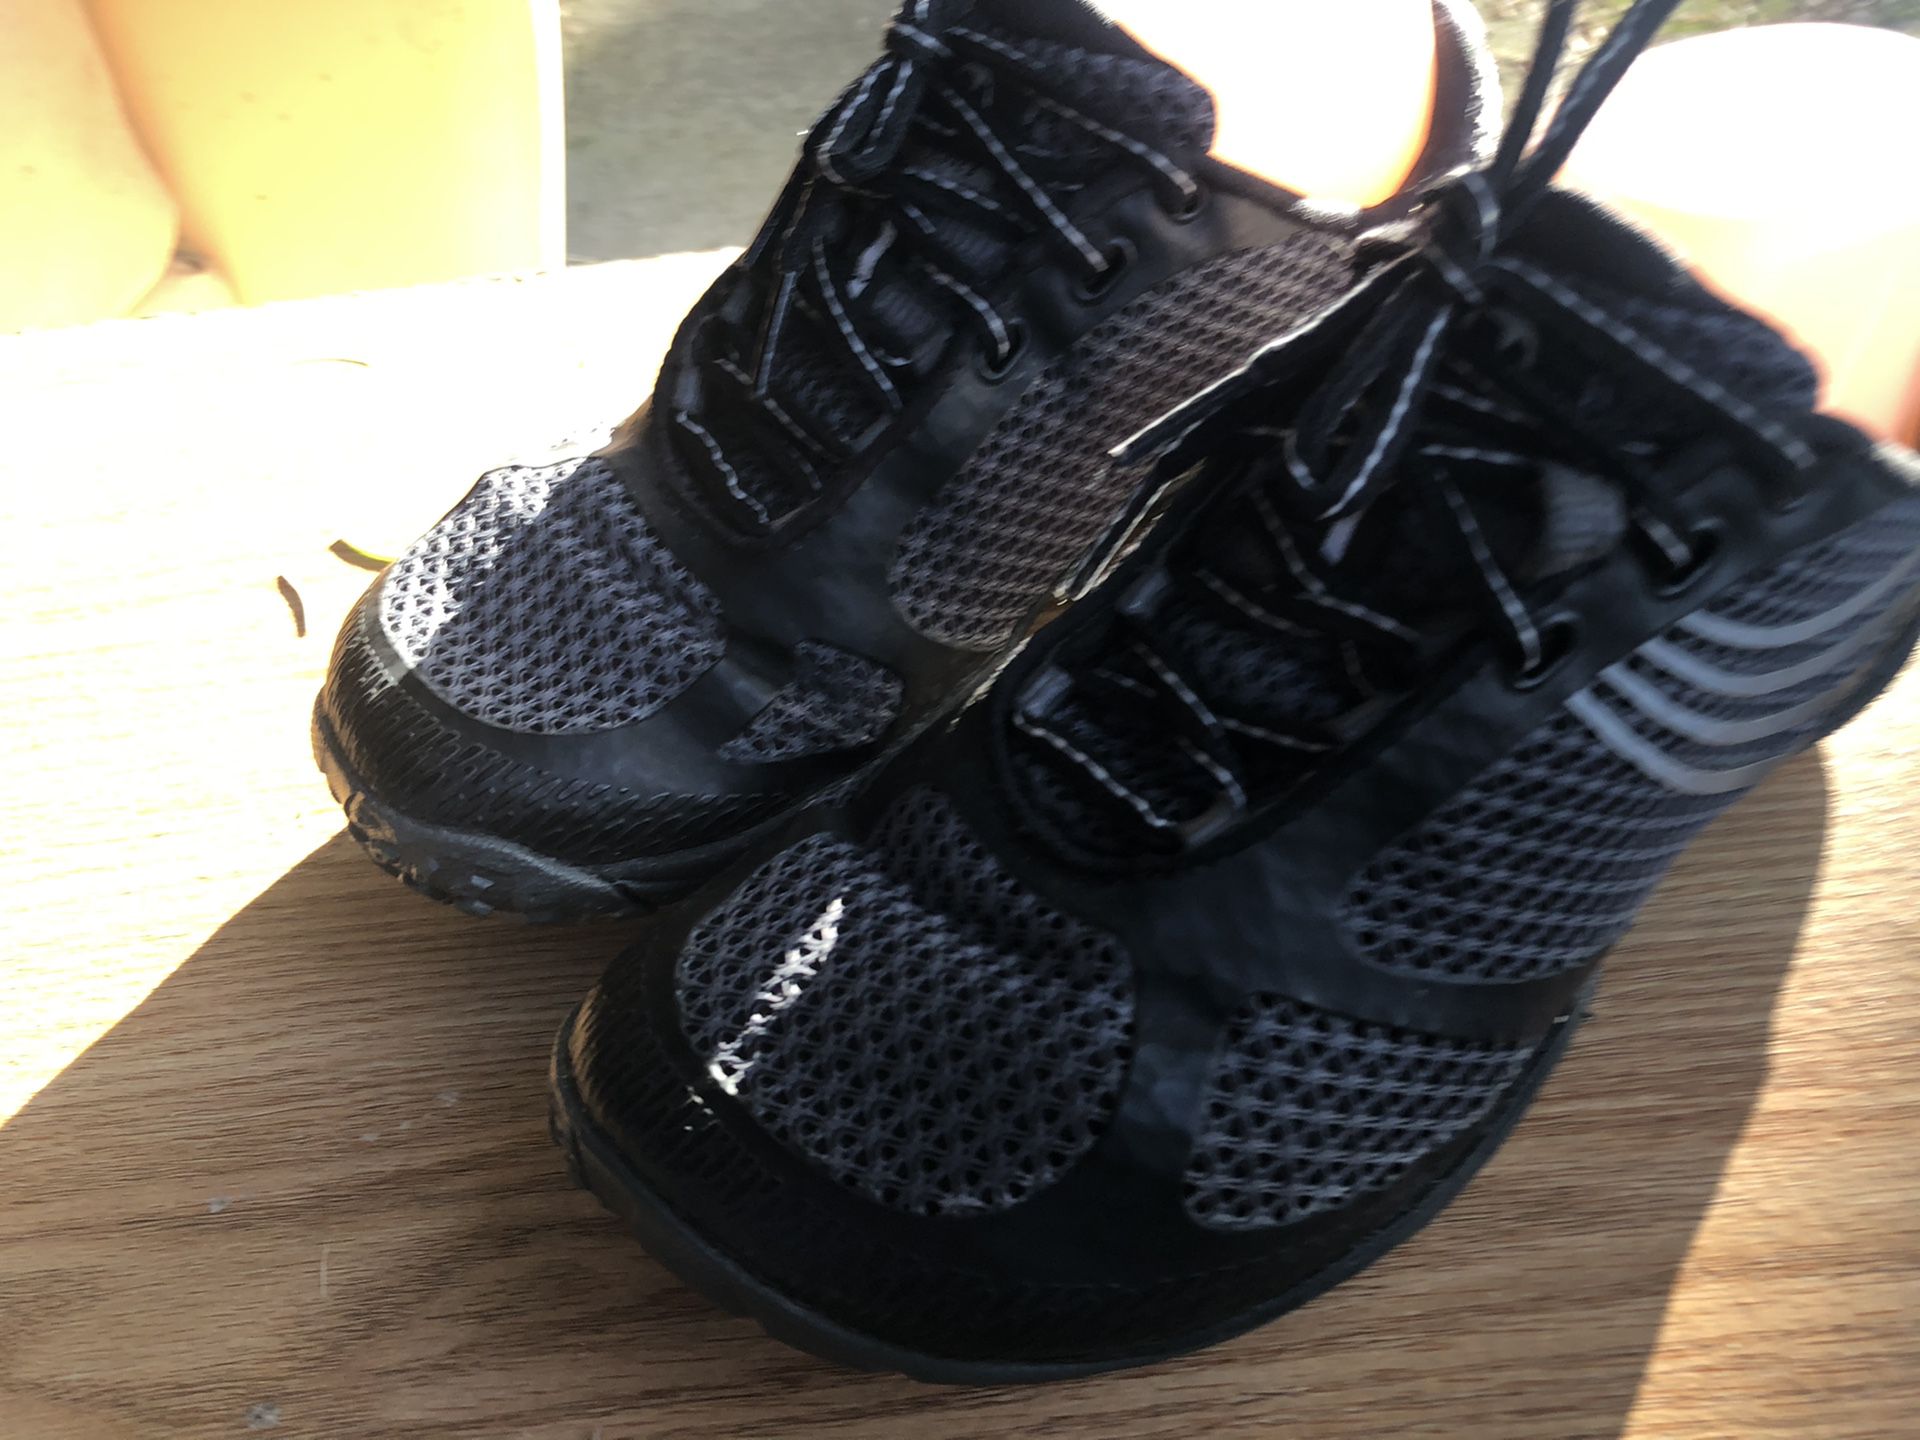 Merrell Pace Glove Women’s Black Barefoot Vibram Soles Sneakers Size 7